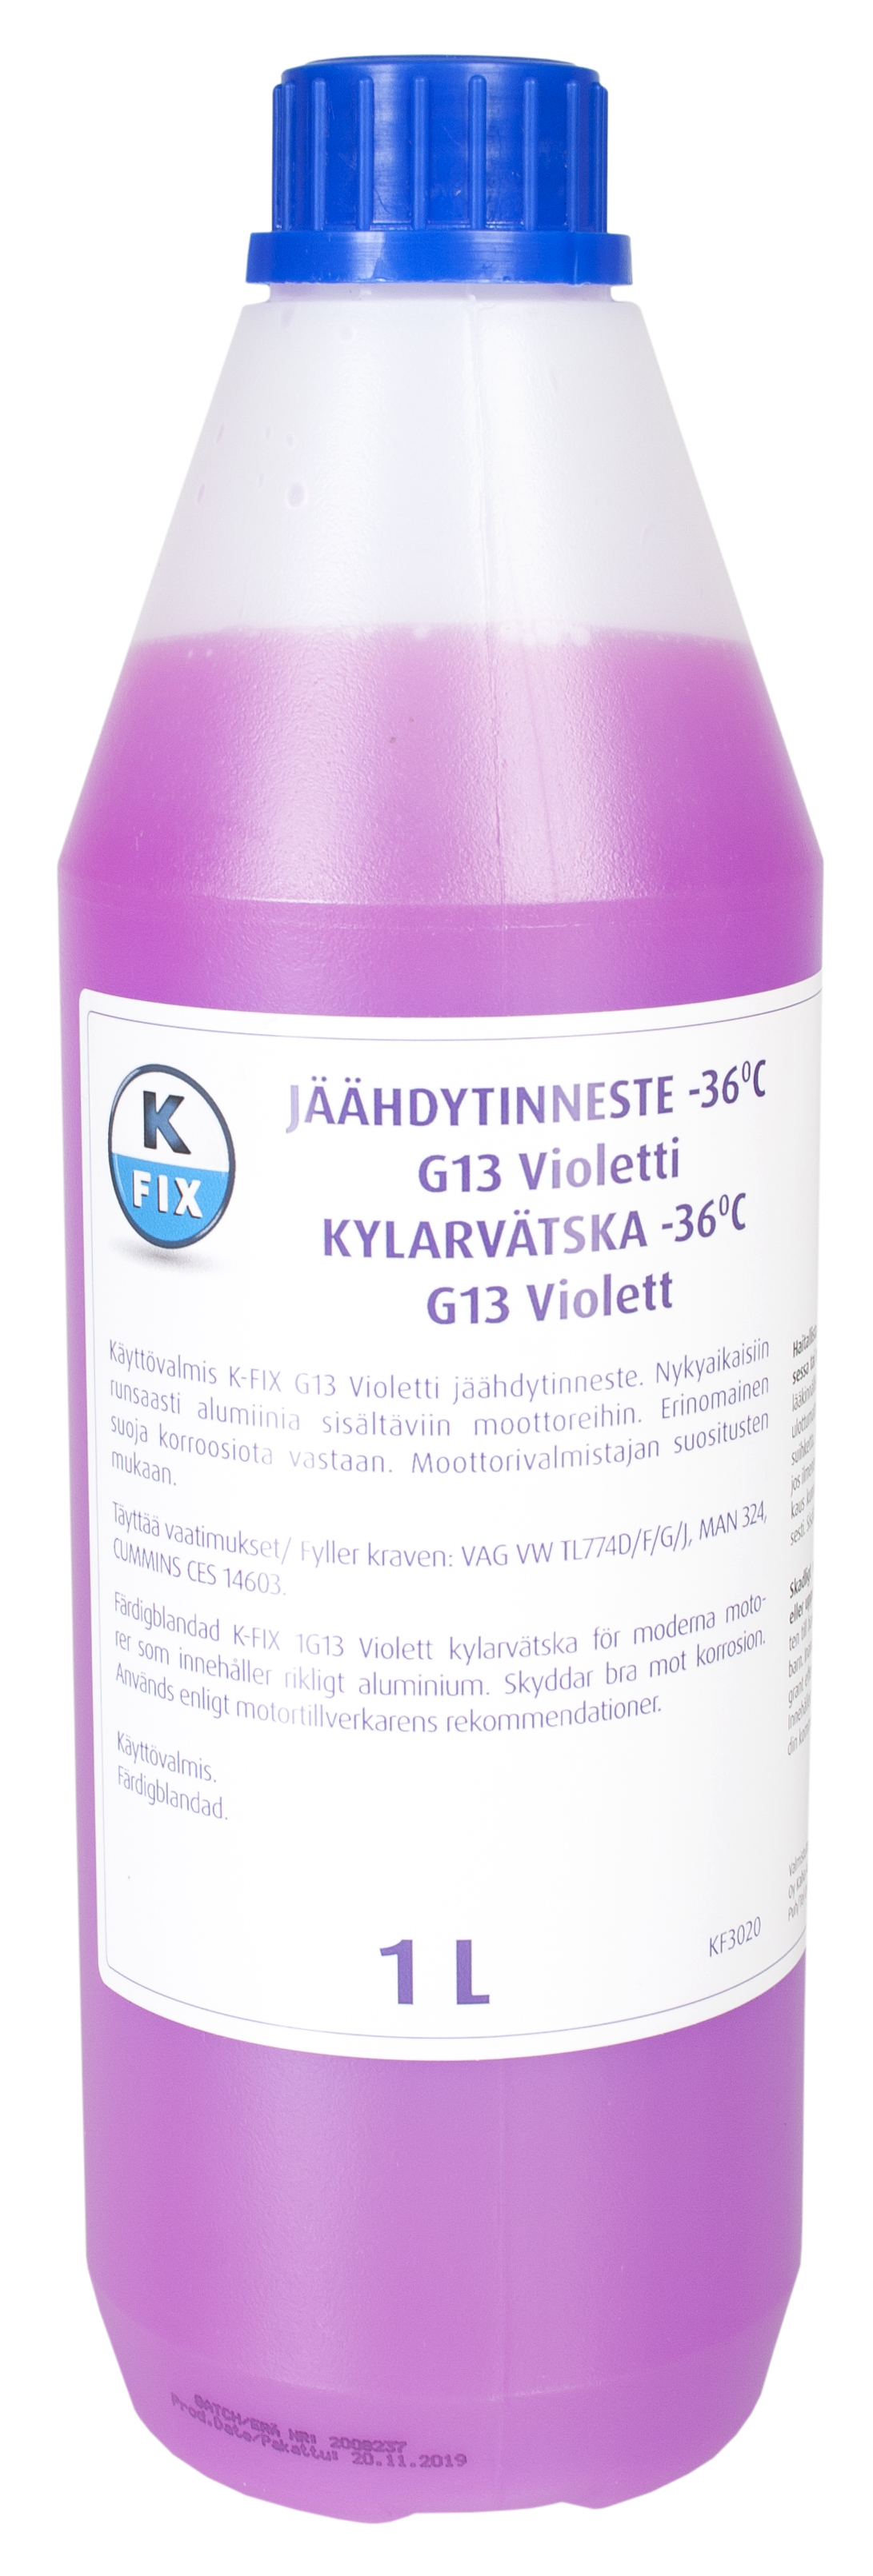 Jhdytinneste G13 violetti -36 Kyttvalmis 1L